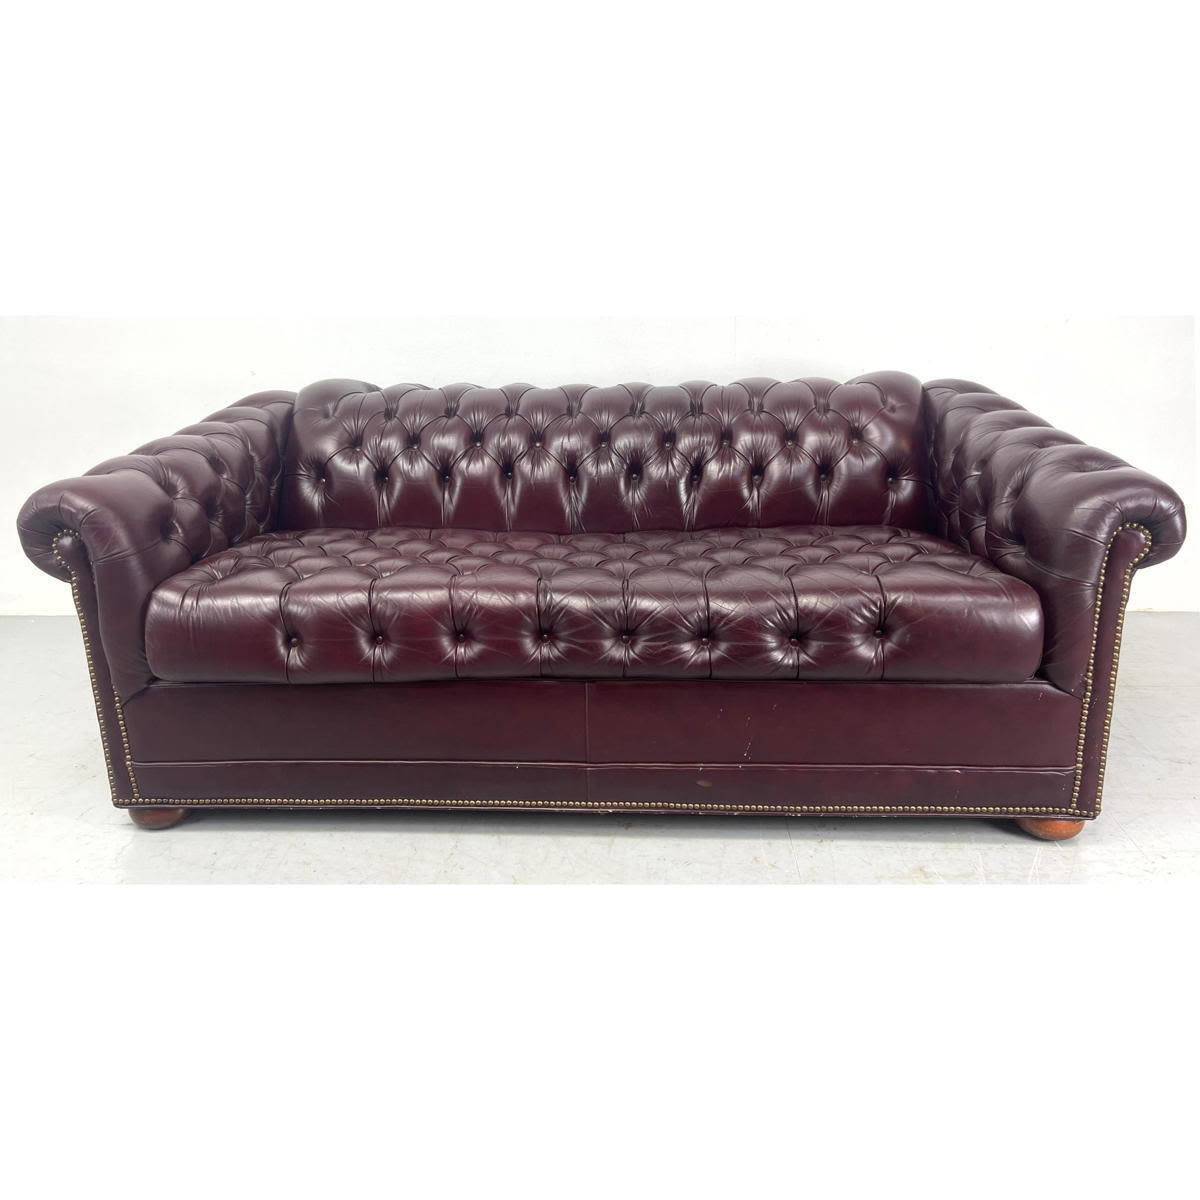 Burgundy leather Chesterfield Sleeper 3003ef